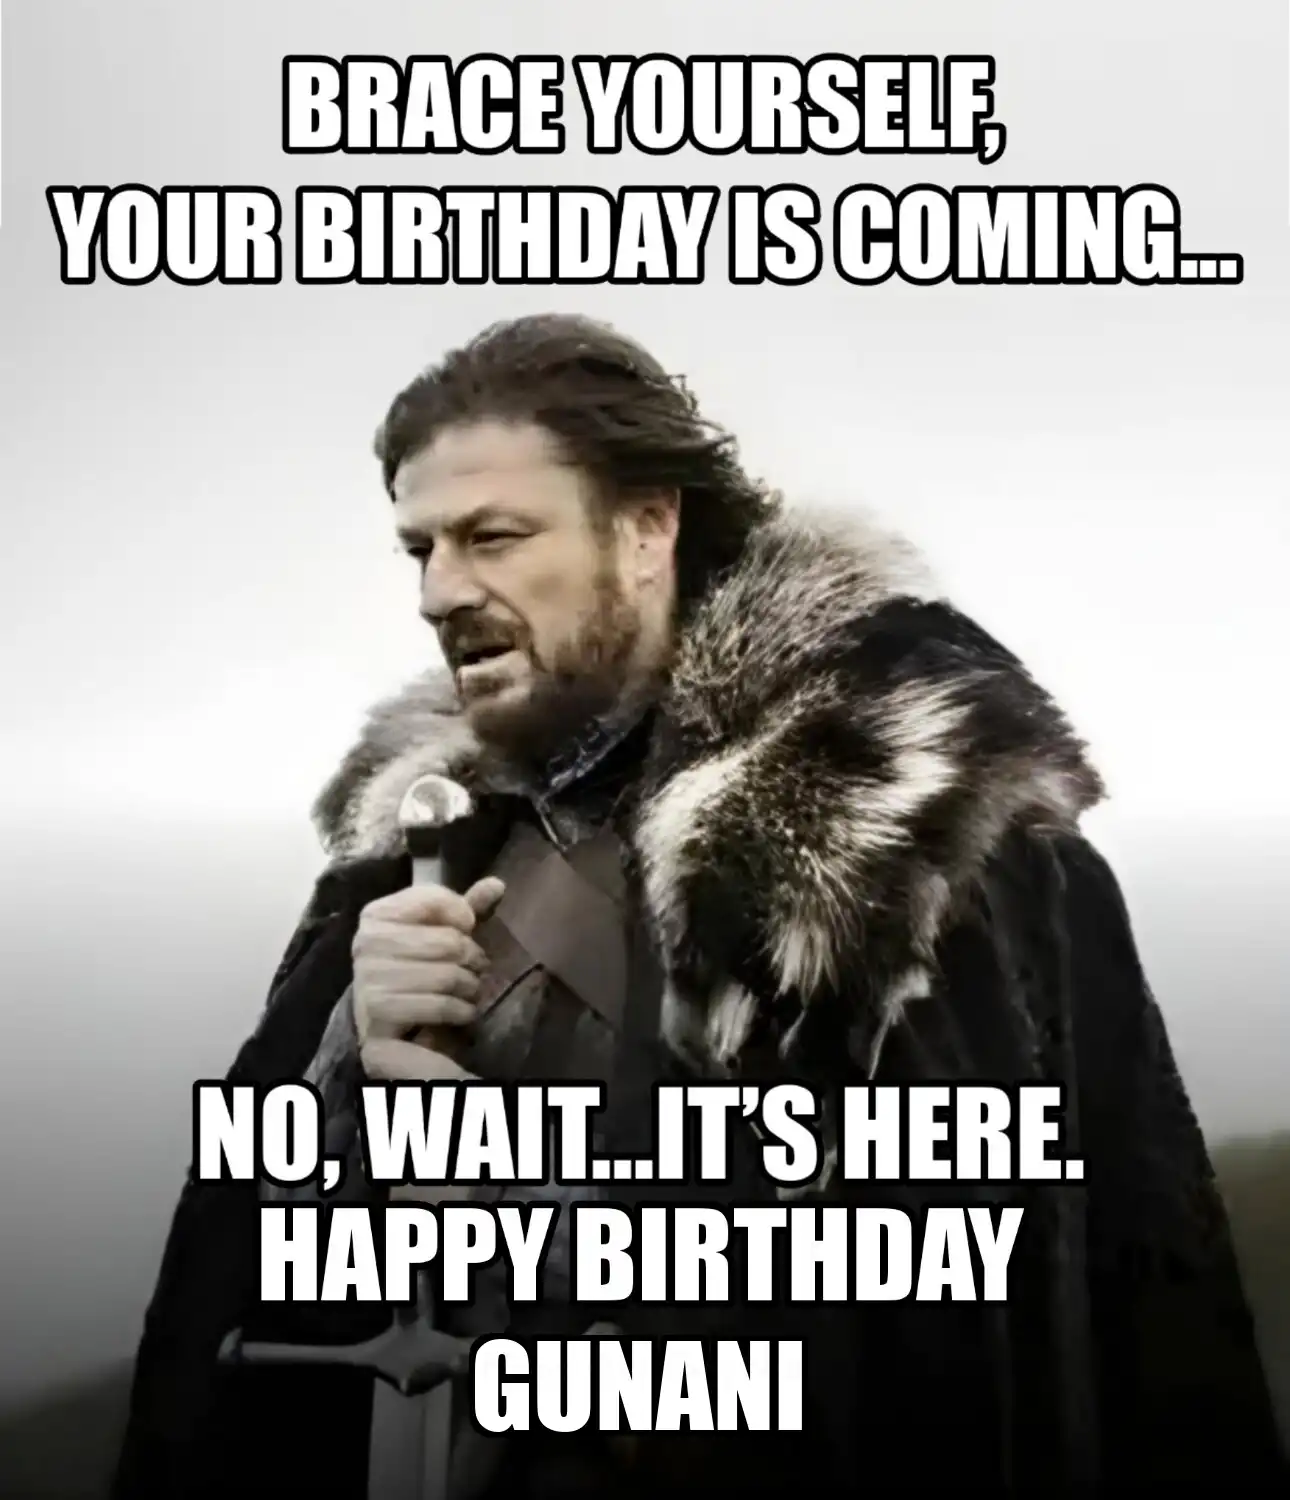 Happy Birthday Gunani Brace Yourself Your Birthday Is Coming Meme